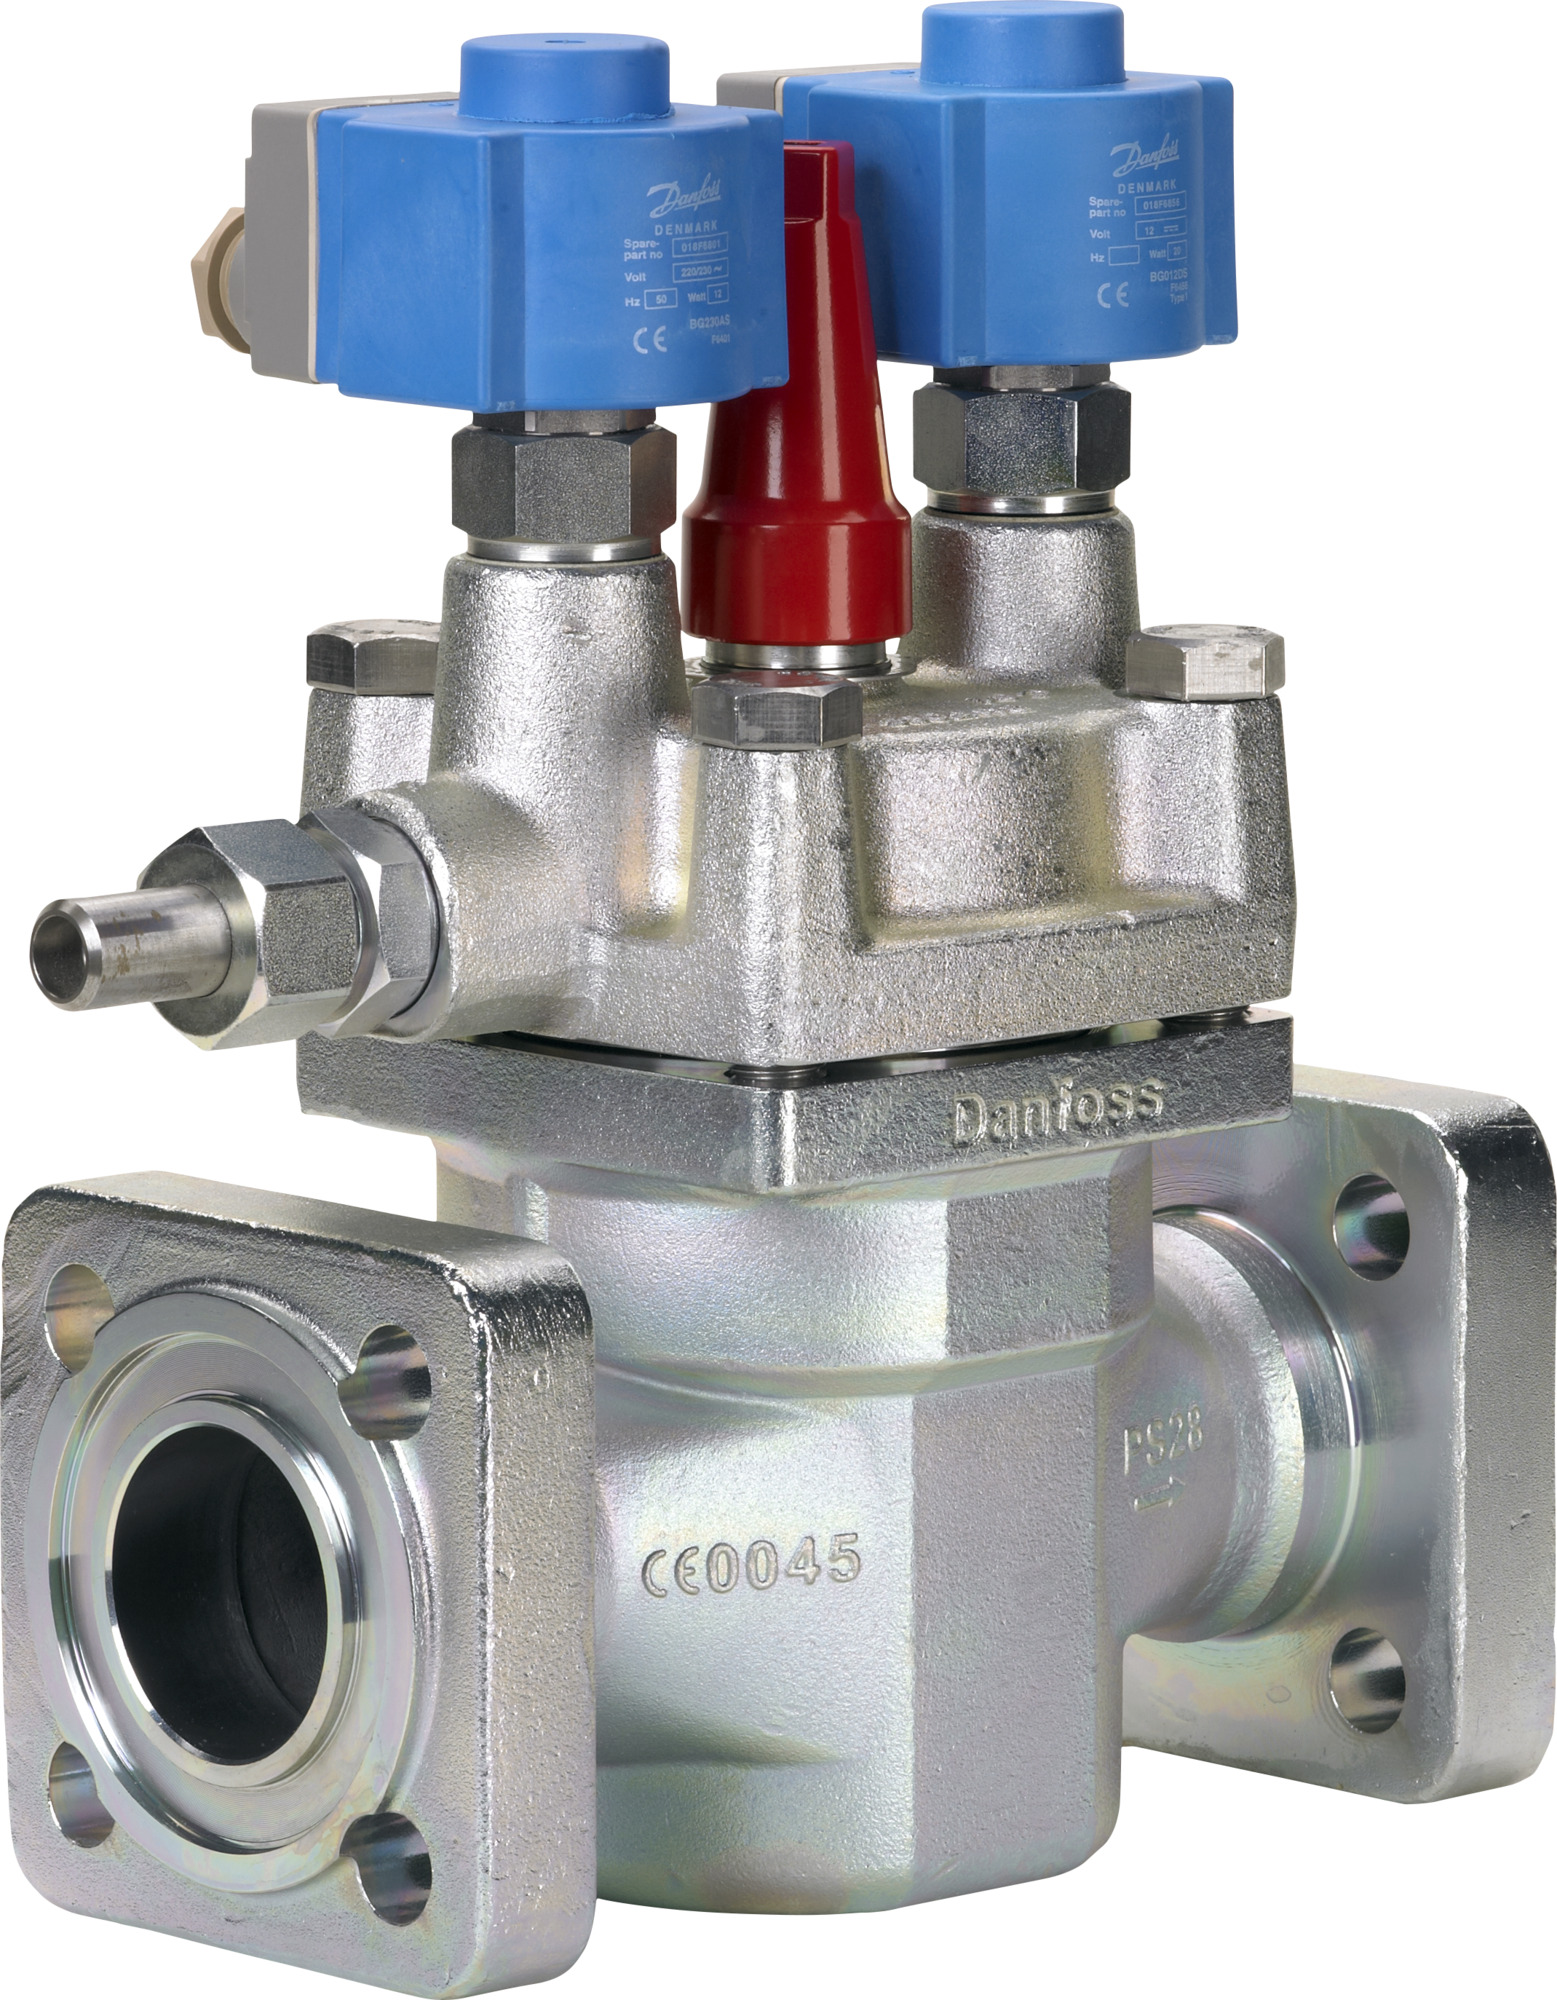 Multifunction valve body, ICV 65 PM, Flange